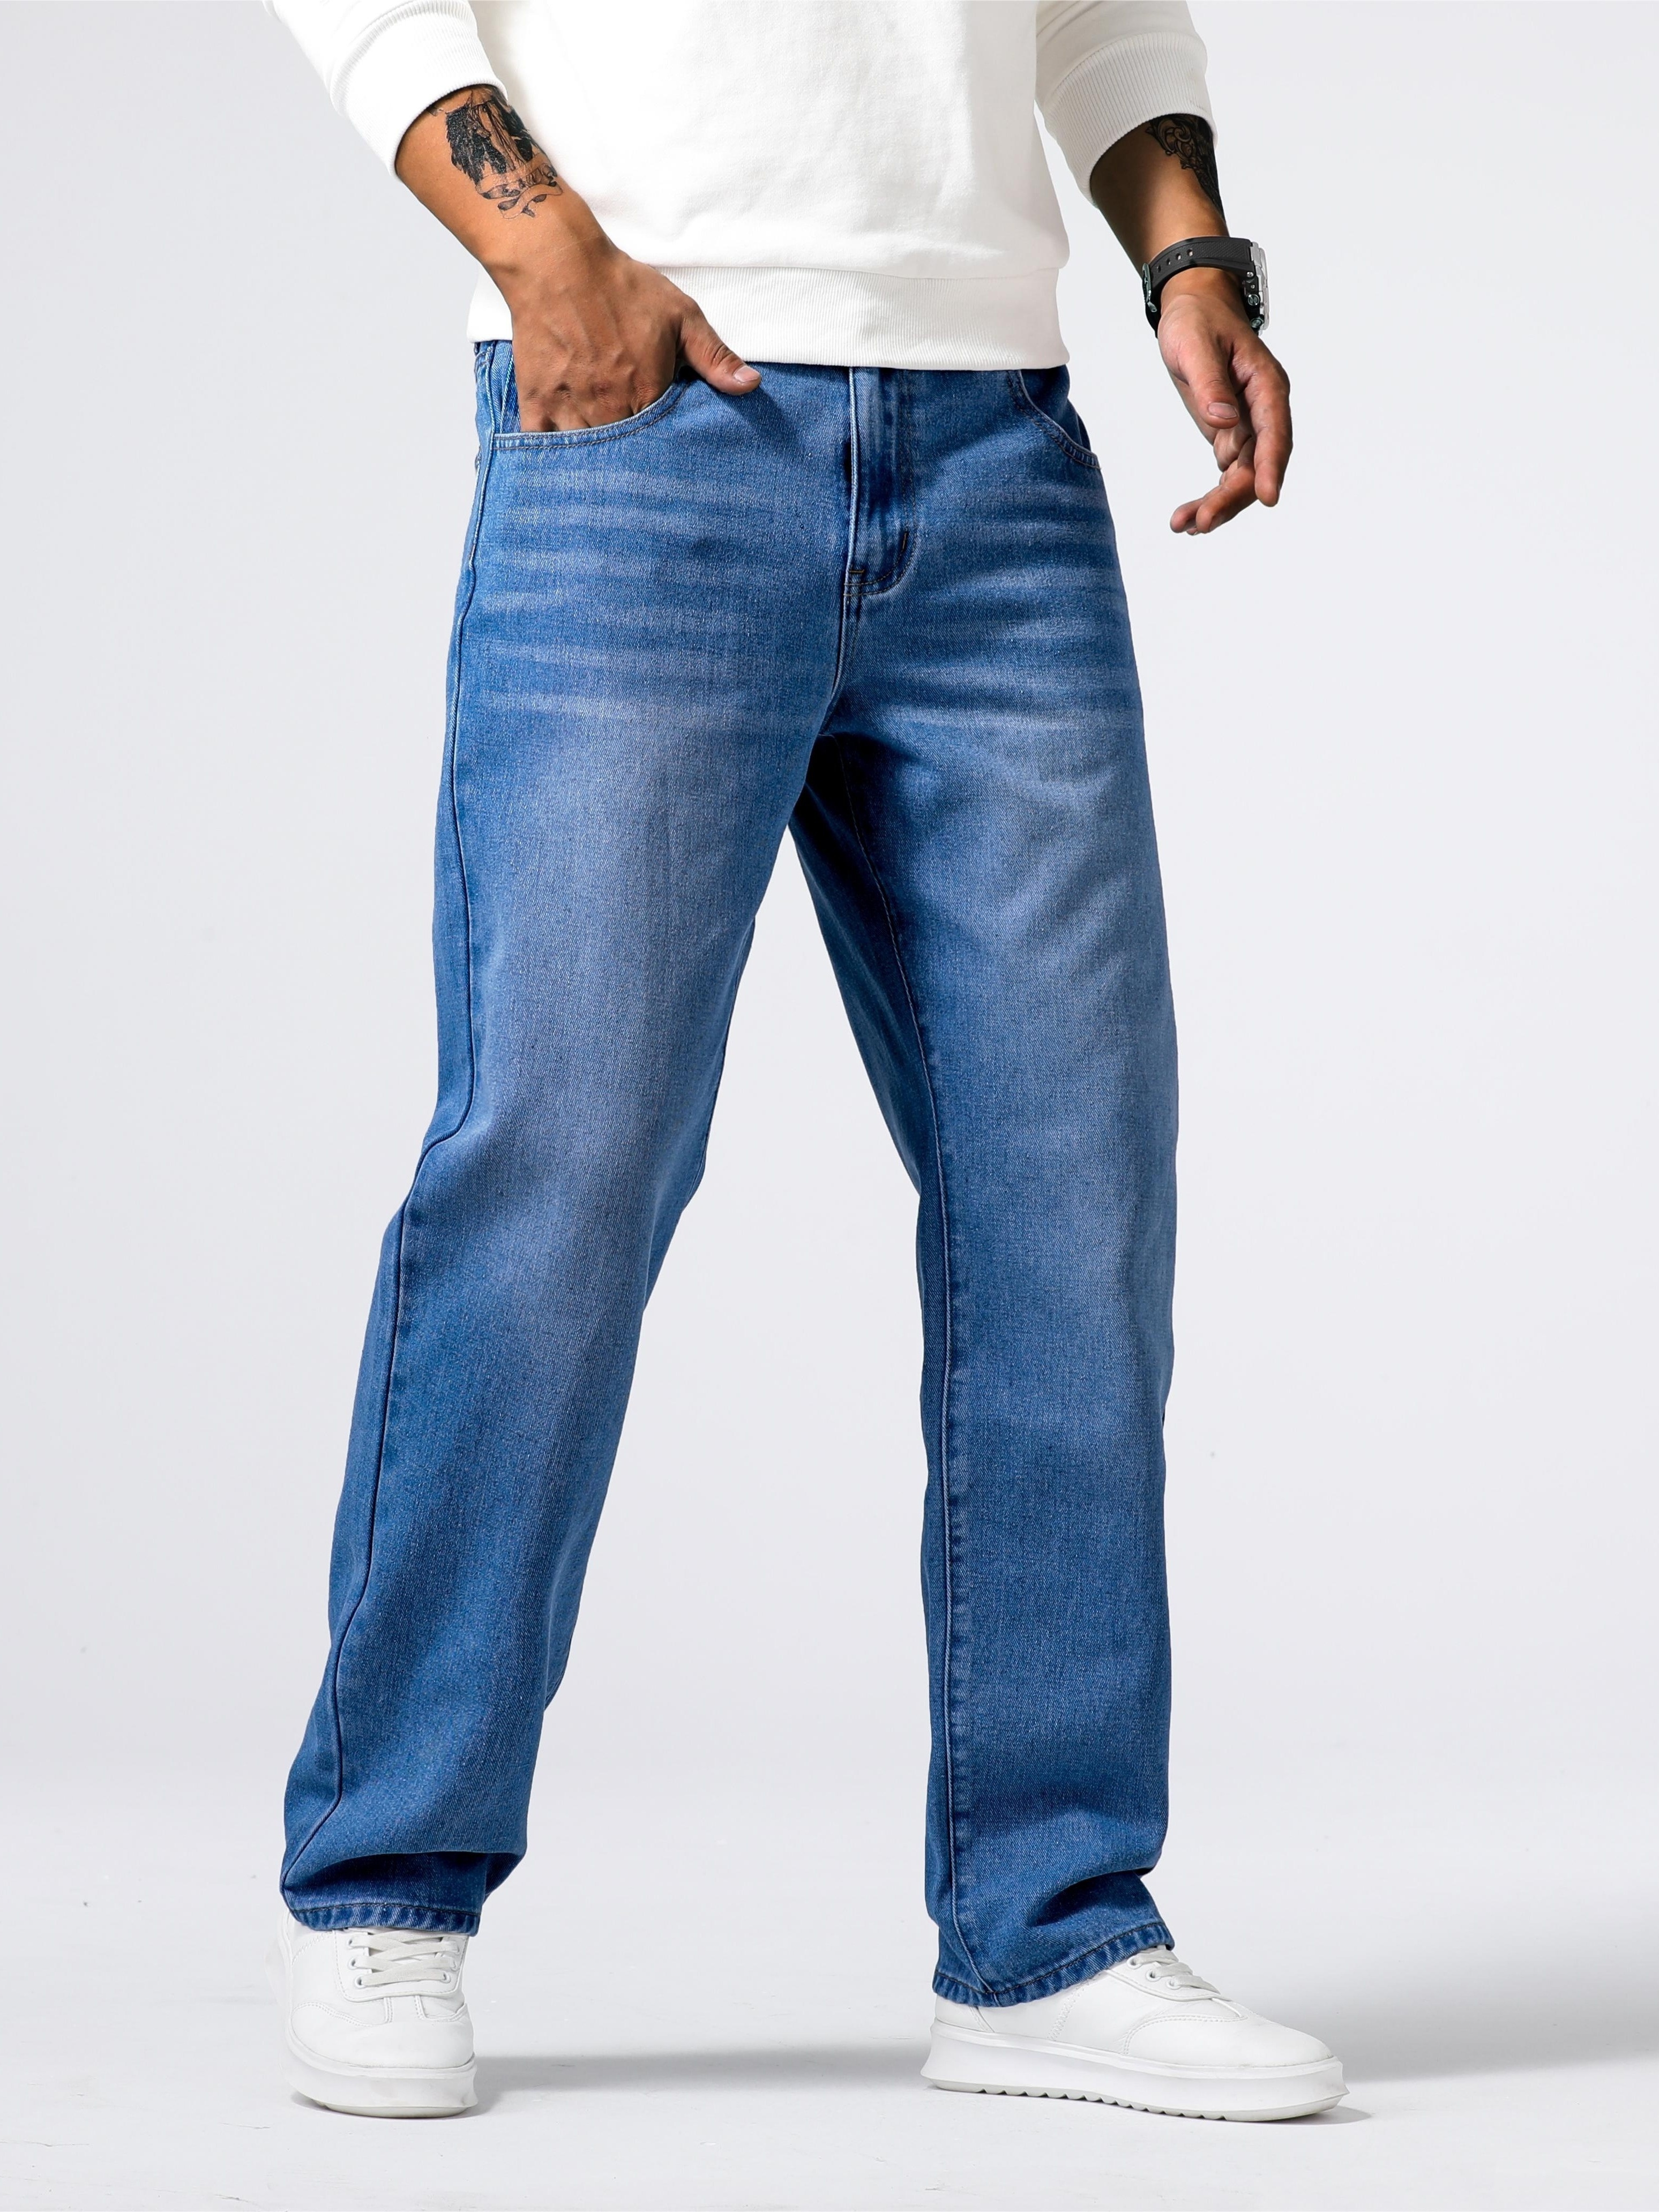 Men's Casual Loose Fit Jeans Street Style Straight Leg Denim